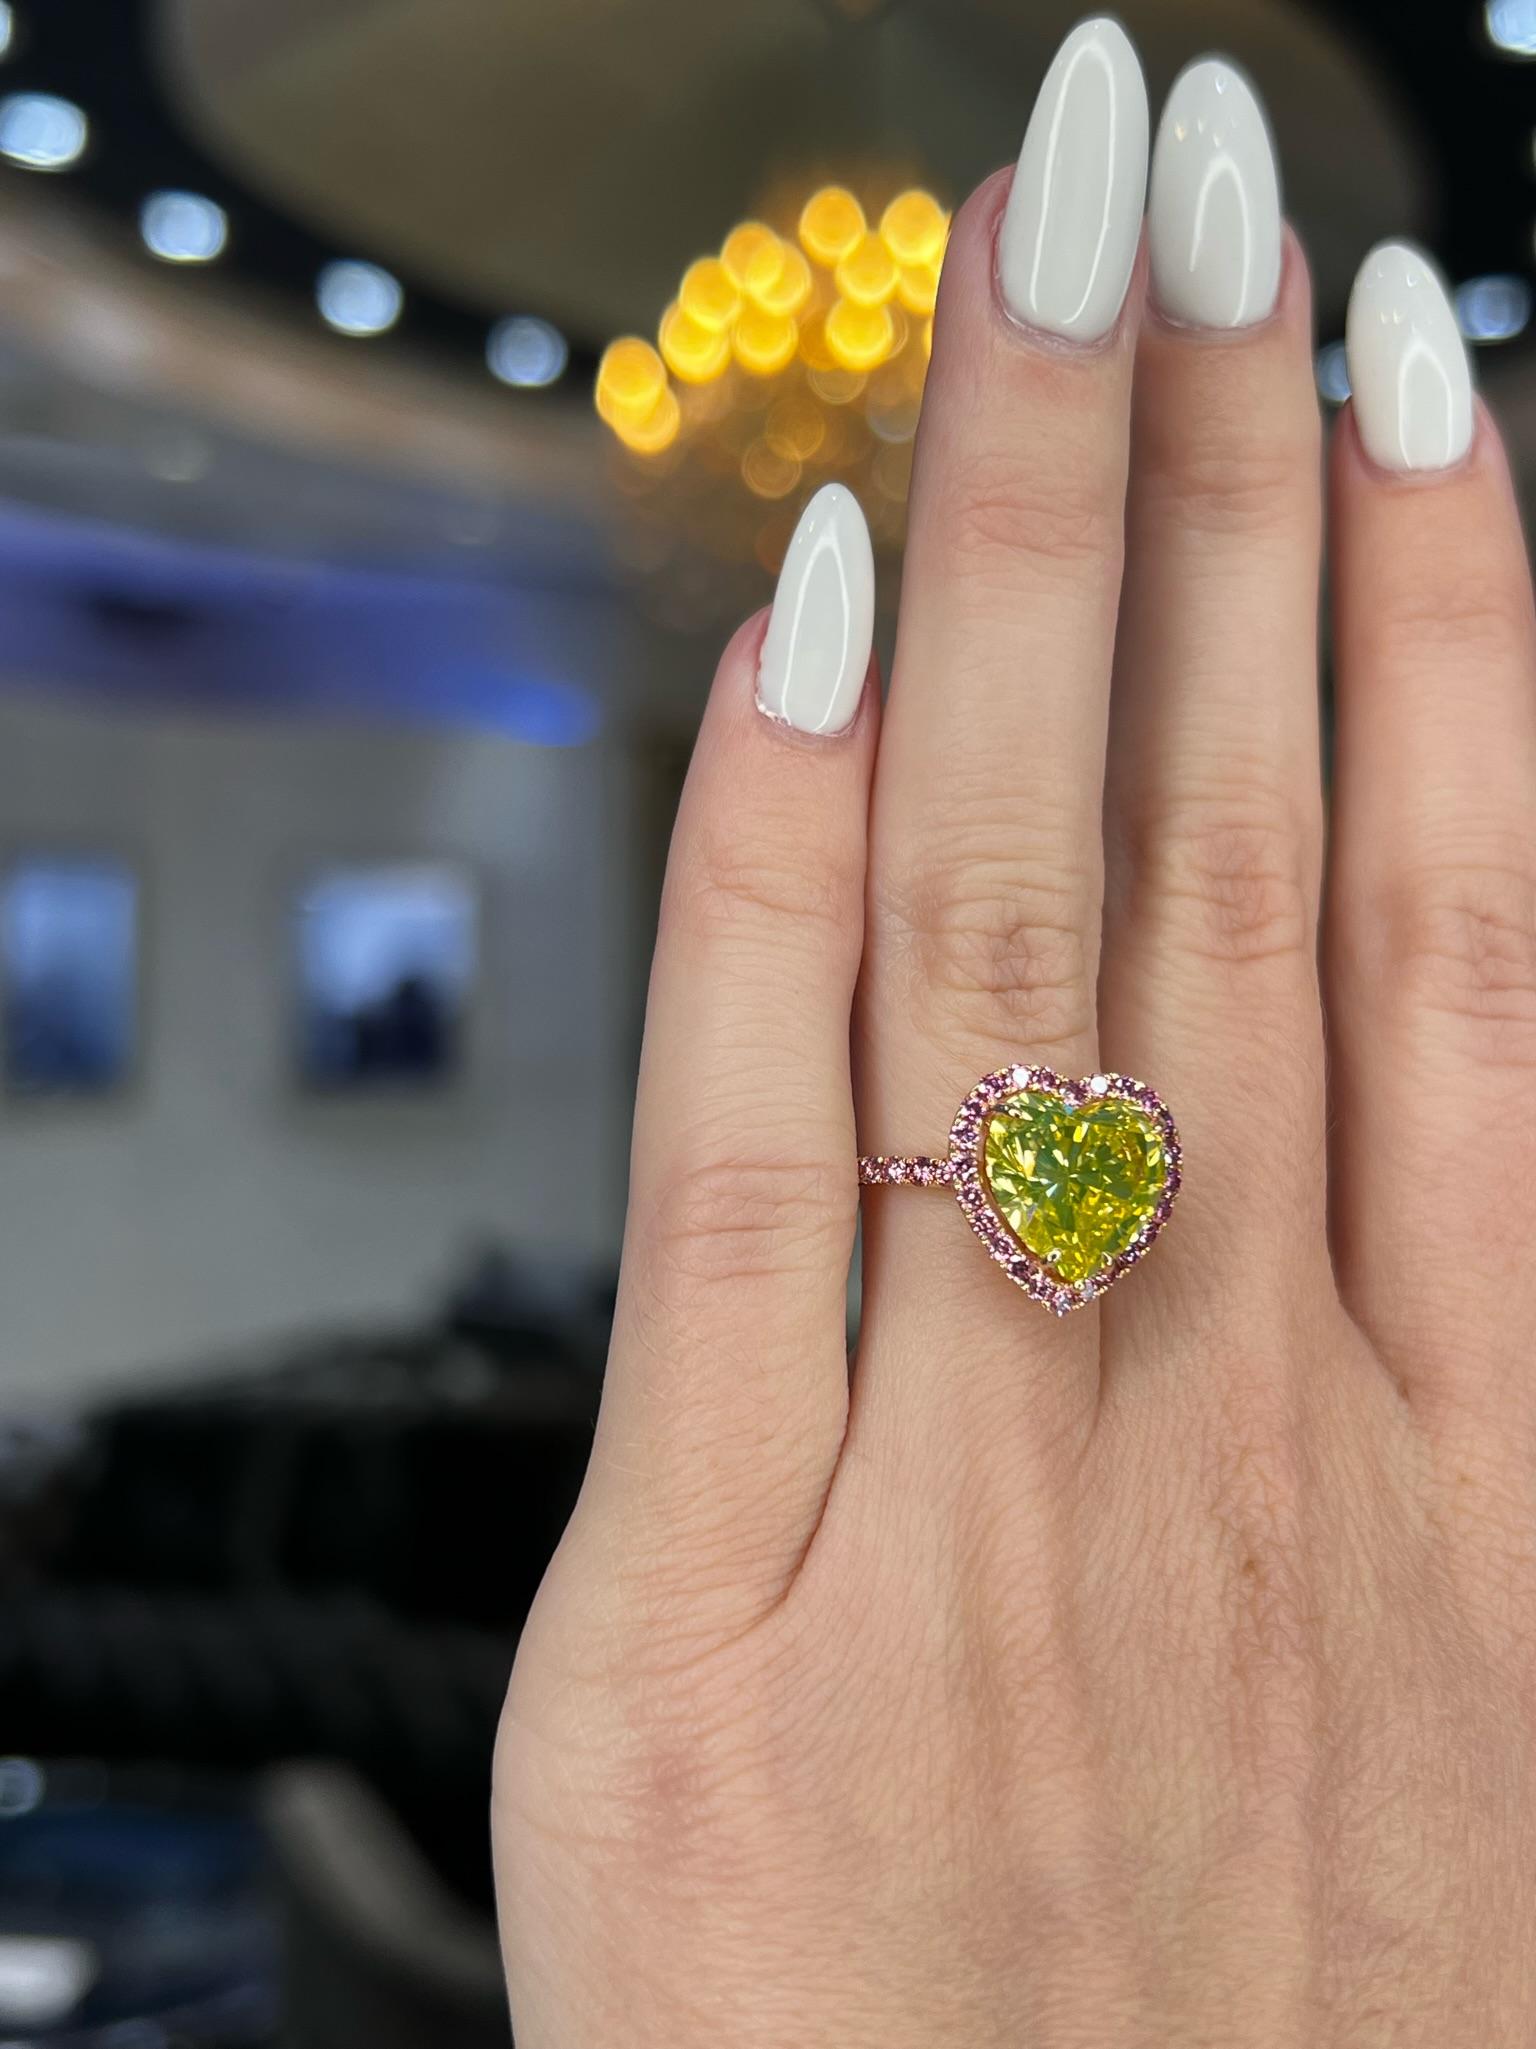 David Rosenberg 4.27ct Heart Shape Fancy Vivid Green Yellow GIA Diamond Ring  For Sale 3